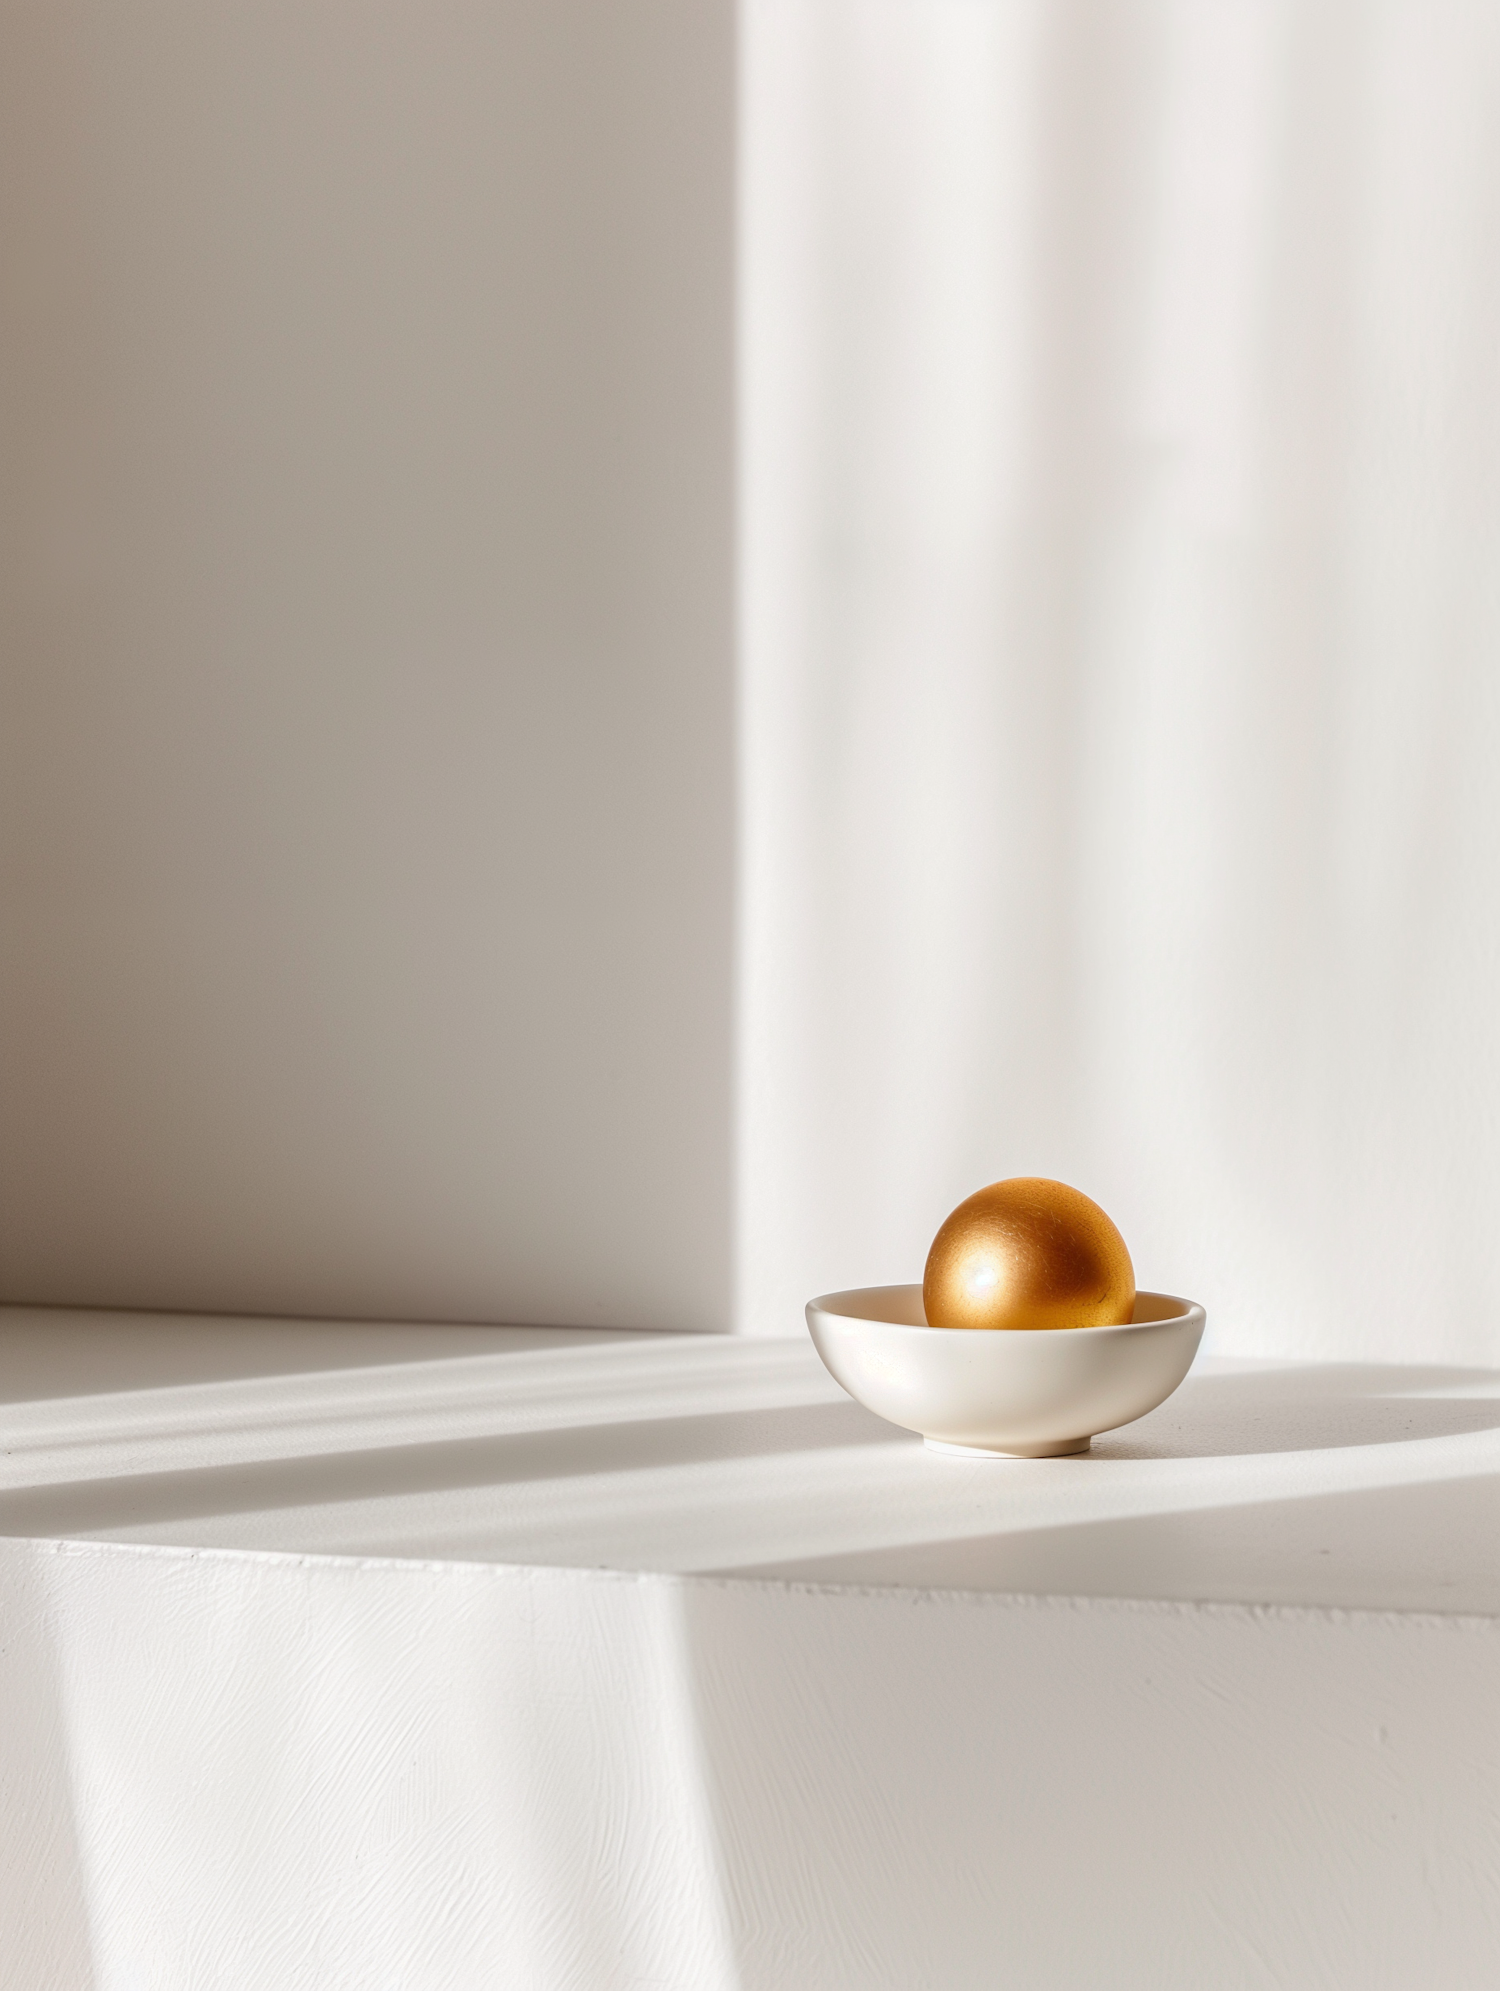 Golden Egg in Minimalist Setting